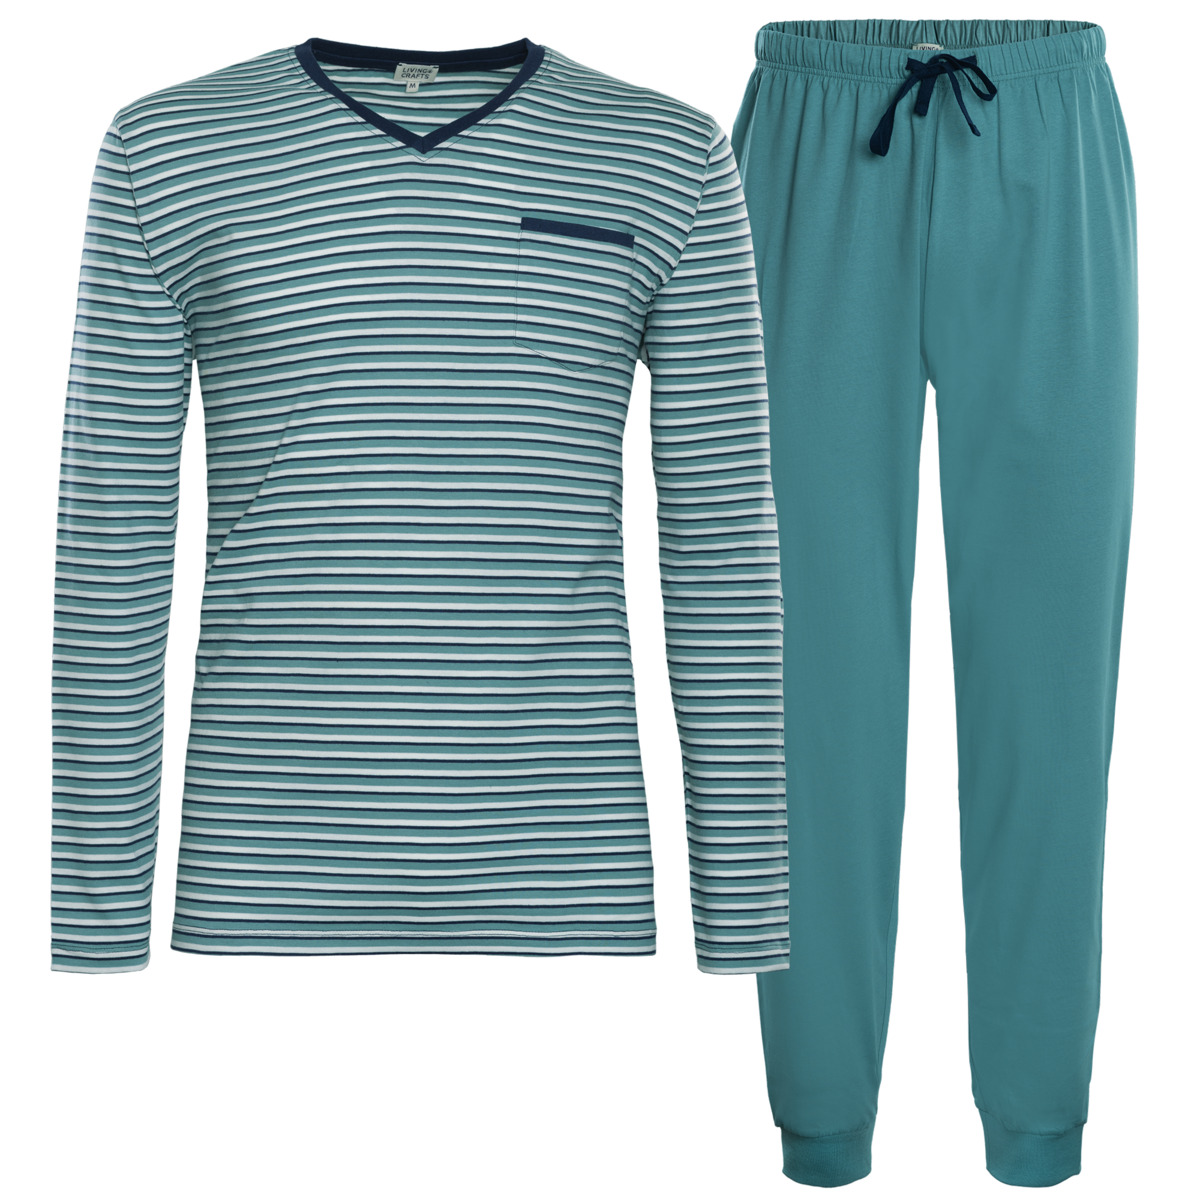 Turquoise Pyjama, COLIN